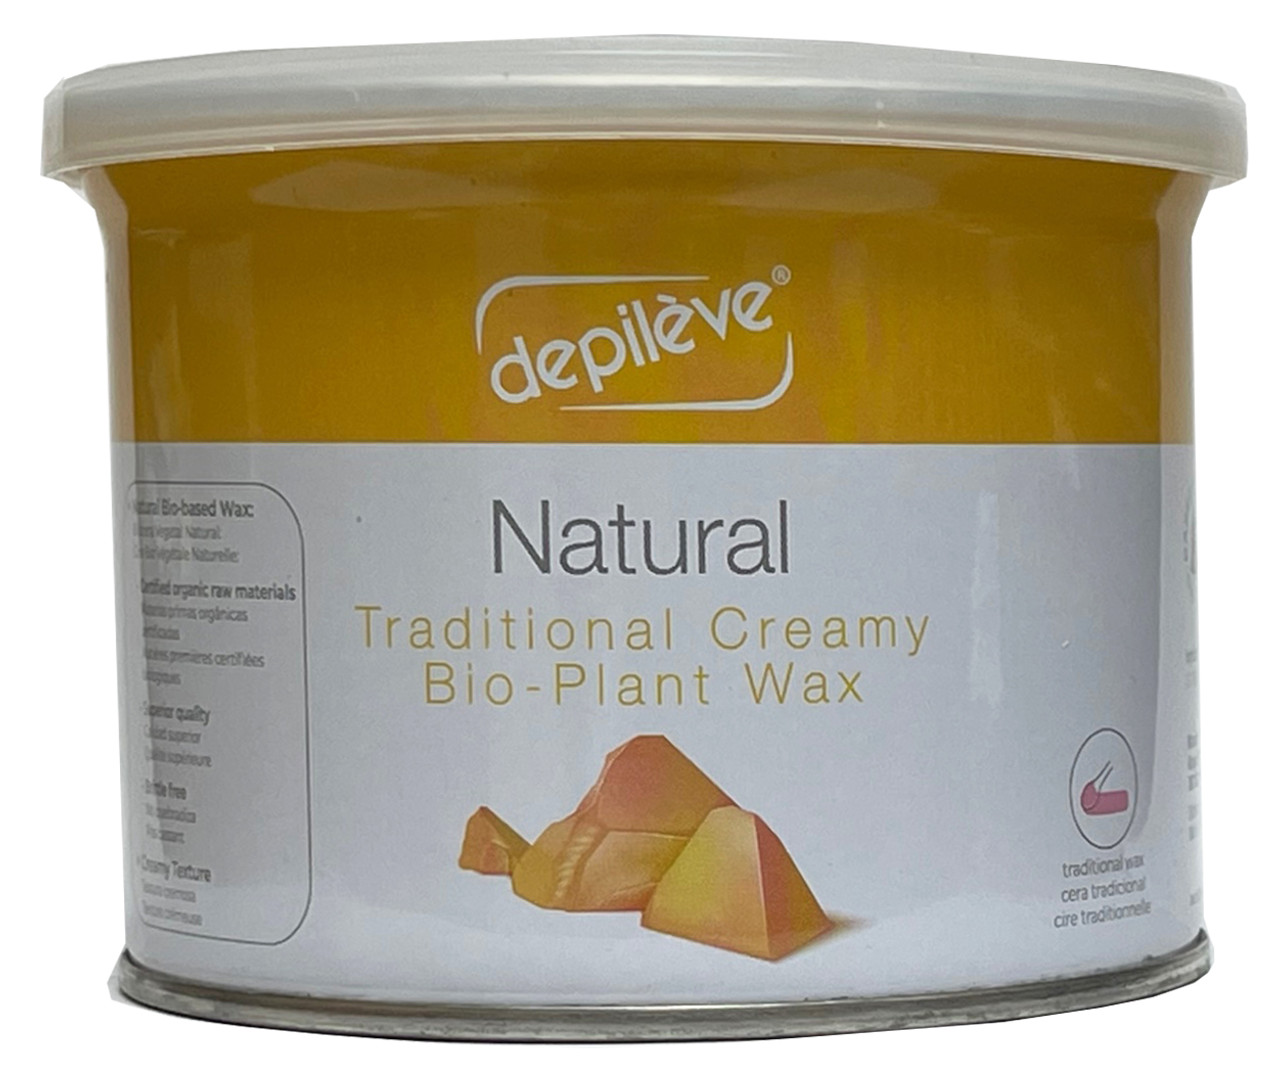 Depileve Natural Traditional Creamy Bio-Plant Wax - 13.52 fl oz / 400 mL